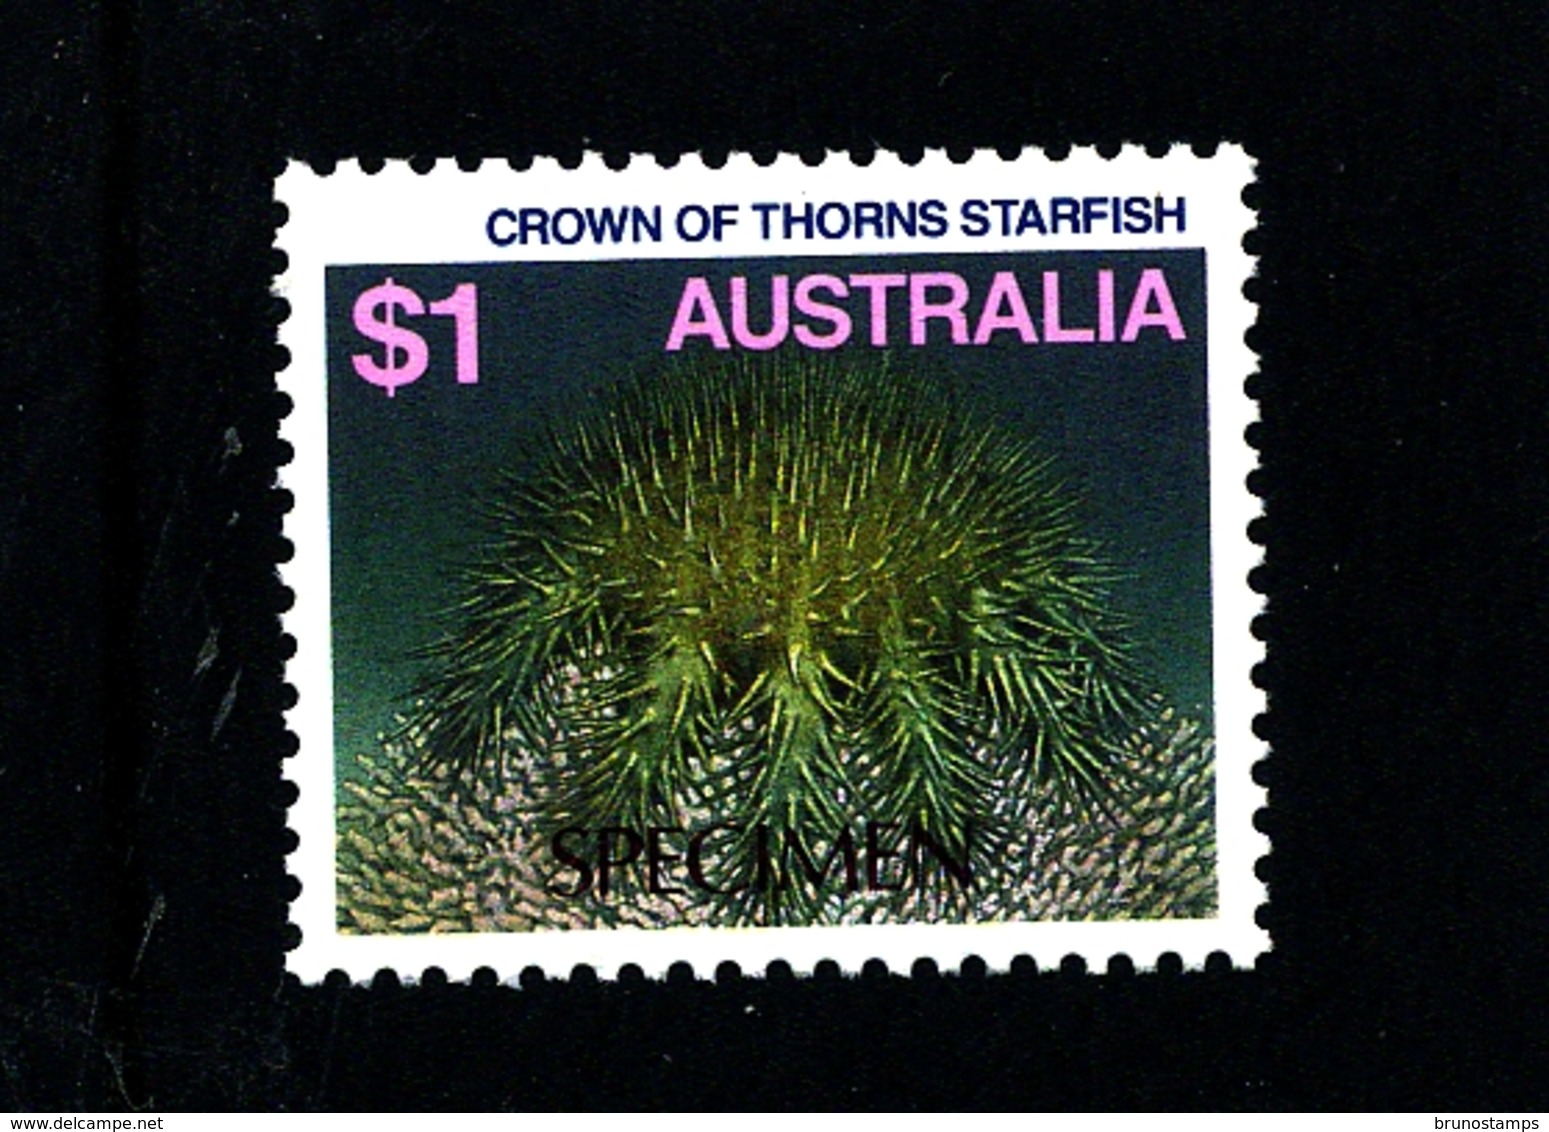 AUSTRALIA - 1988  $ 1  CROWN OF THORNS  STARFISH  SPECIMEN  OVERPRINTED  MINT NH - Variedades Y Curiosidades